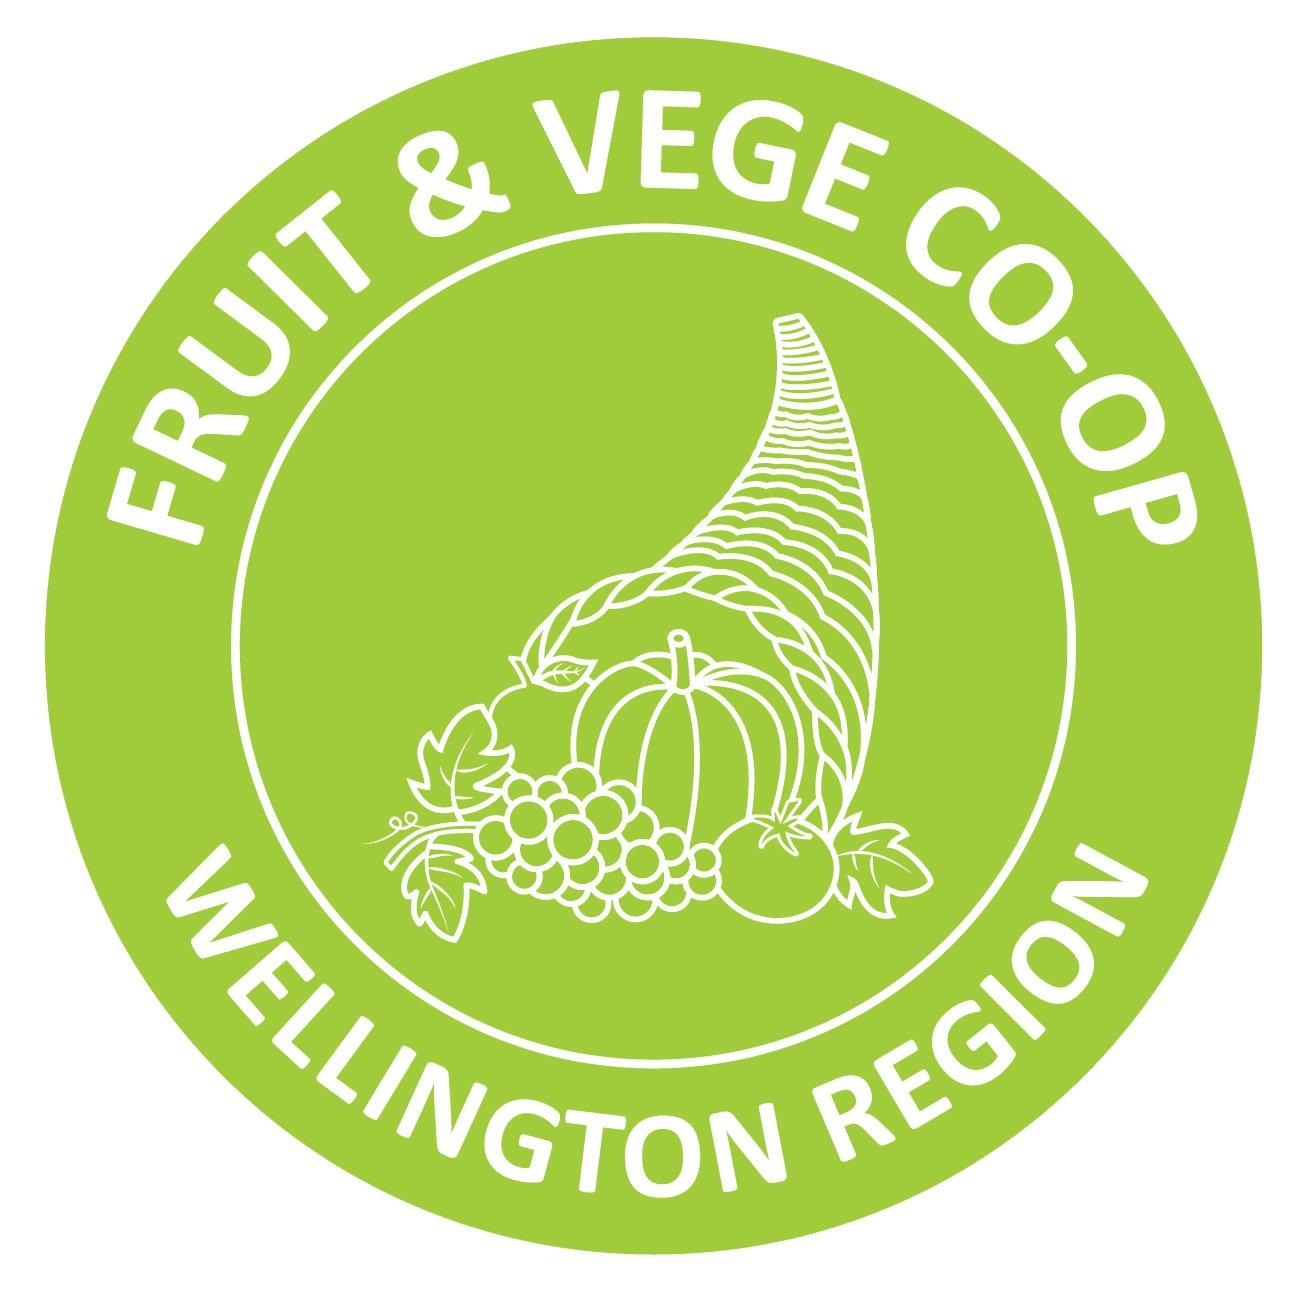 Wellington Region Fruit and Vege Co-op